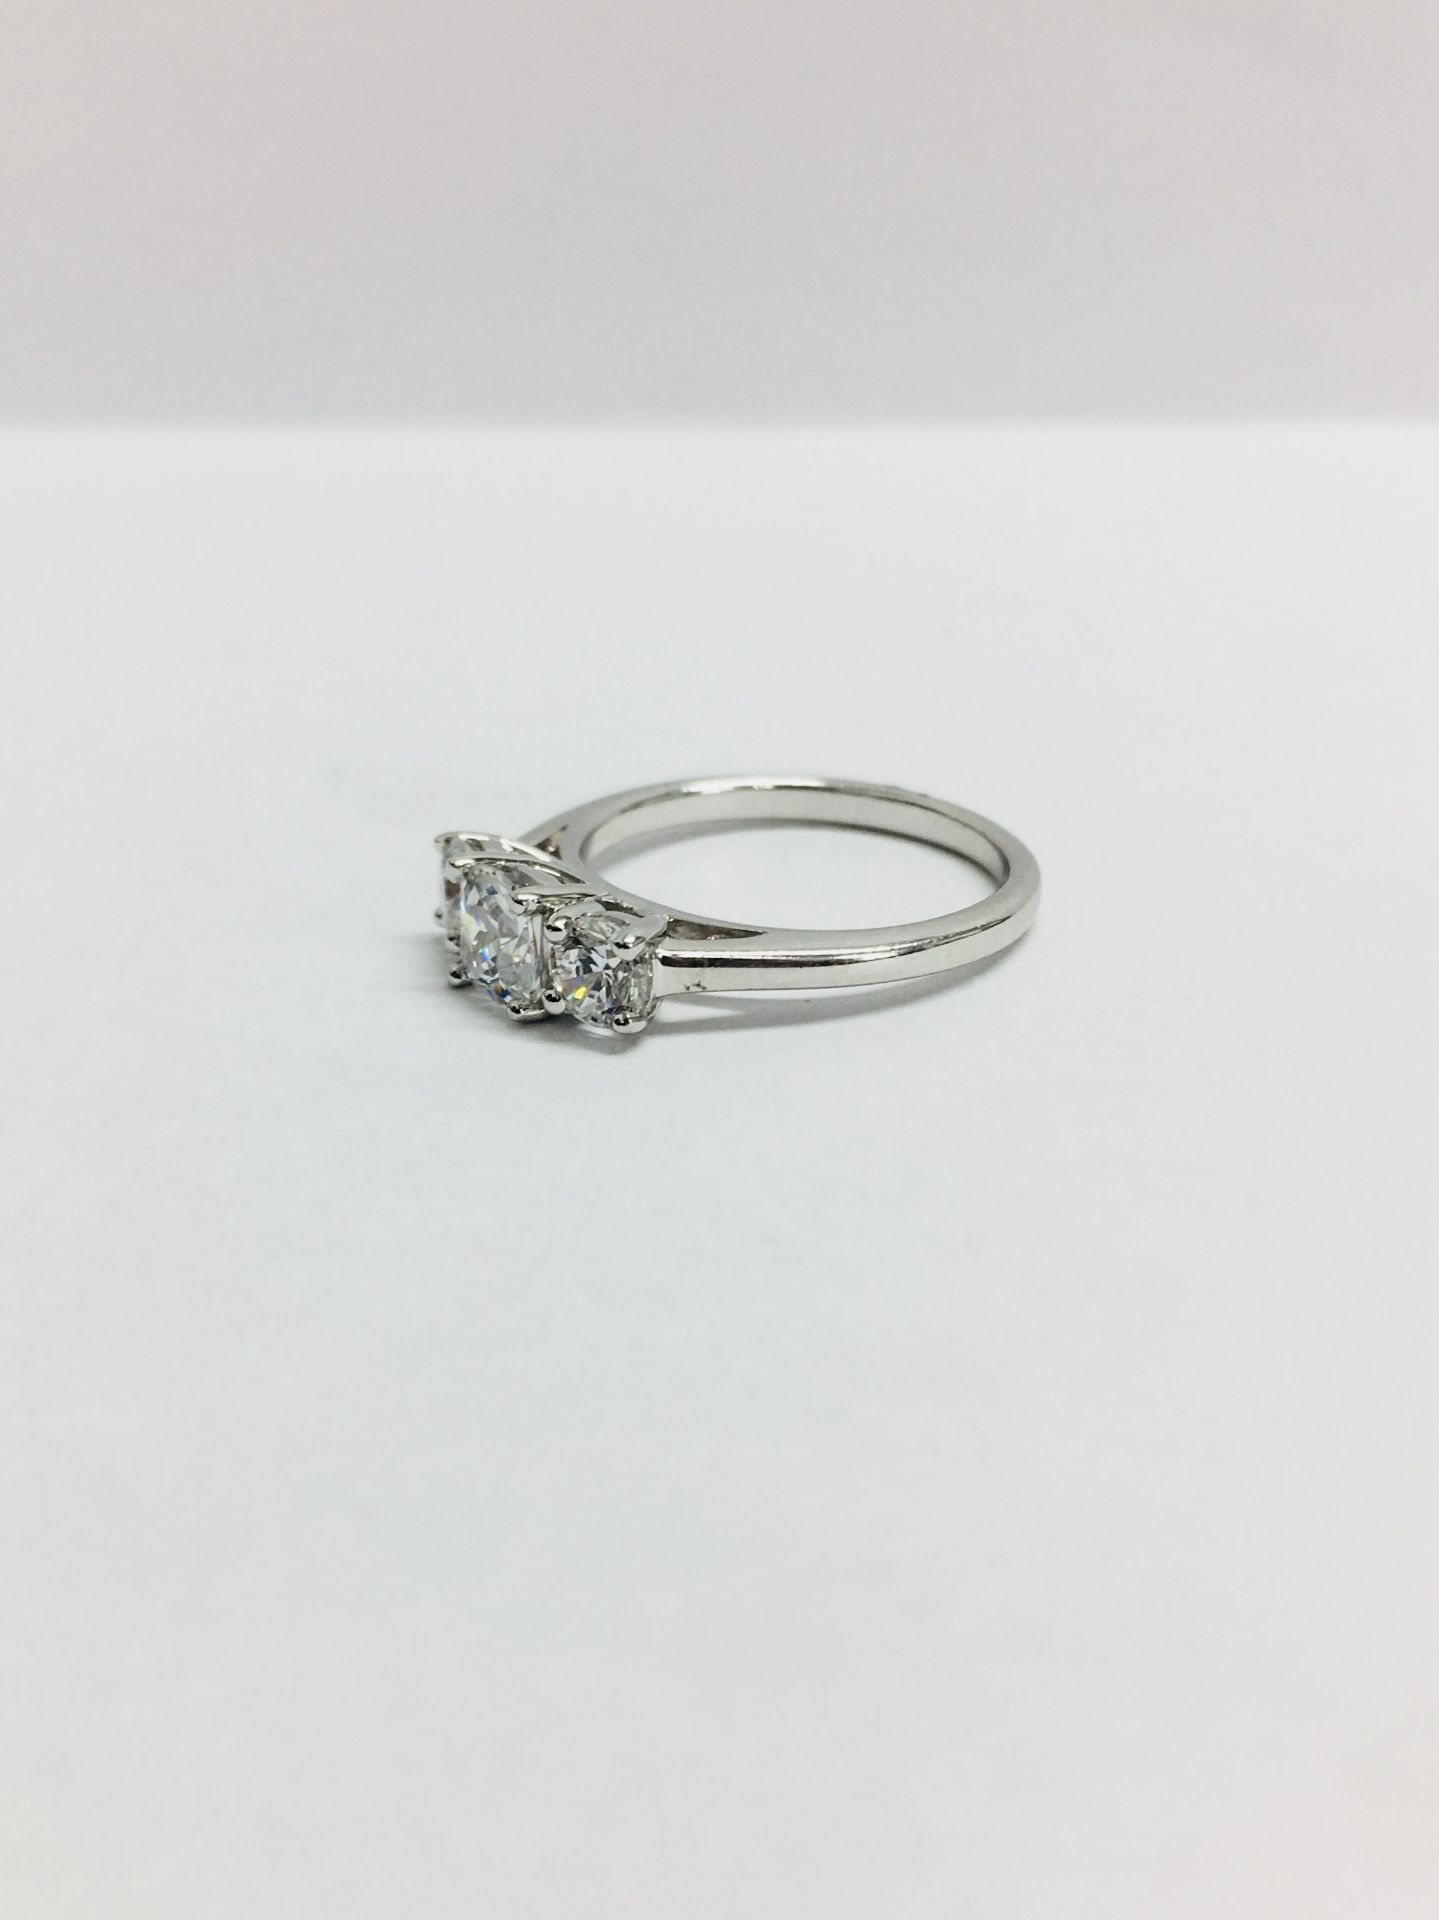 Platinum diamond three stone ring,centre stone 1ct cushion h colour vs clarity,excellent ut and - Image 2 of 4